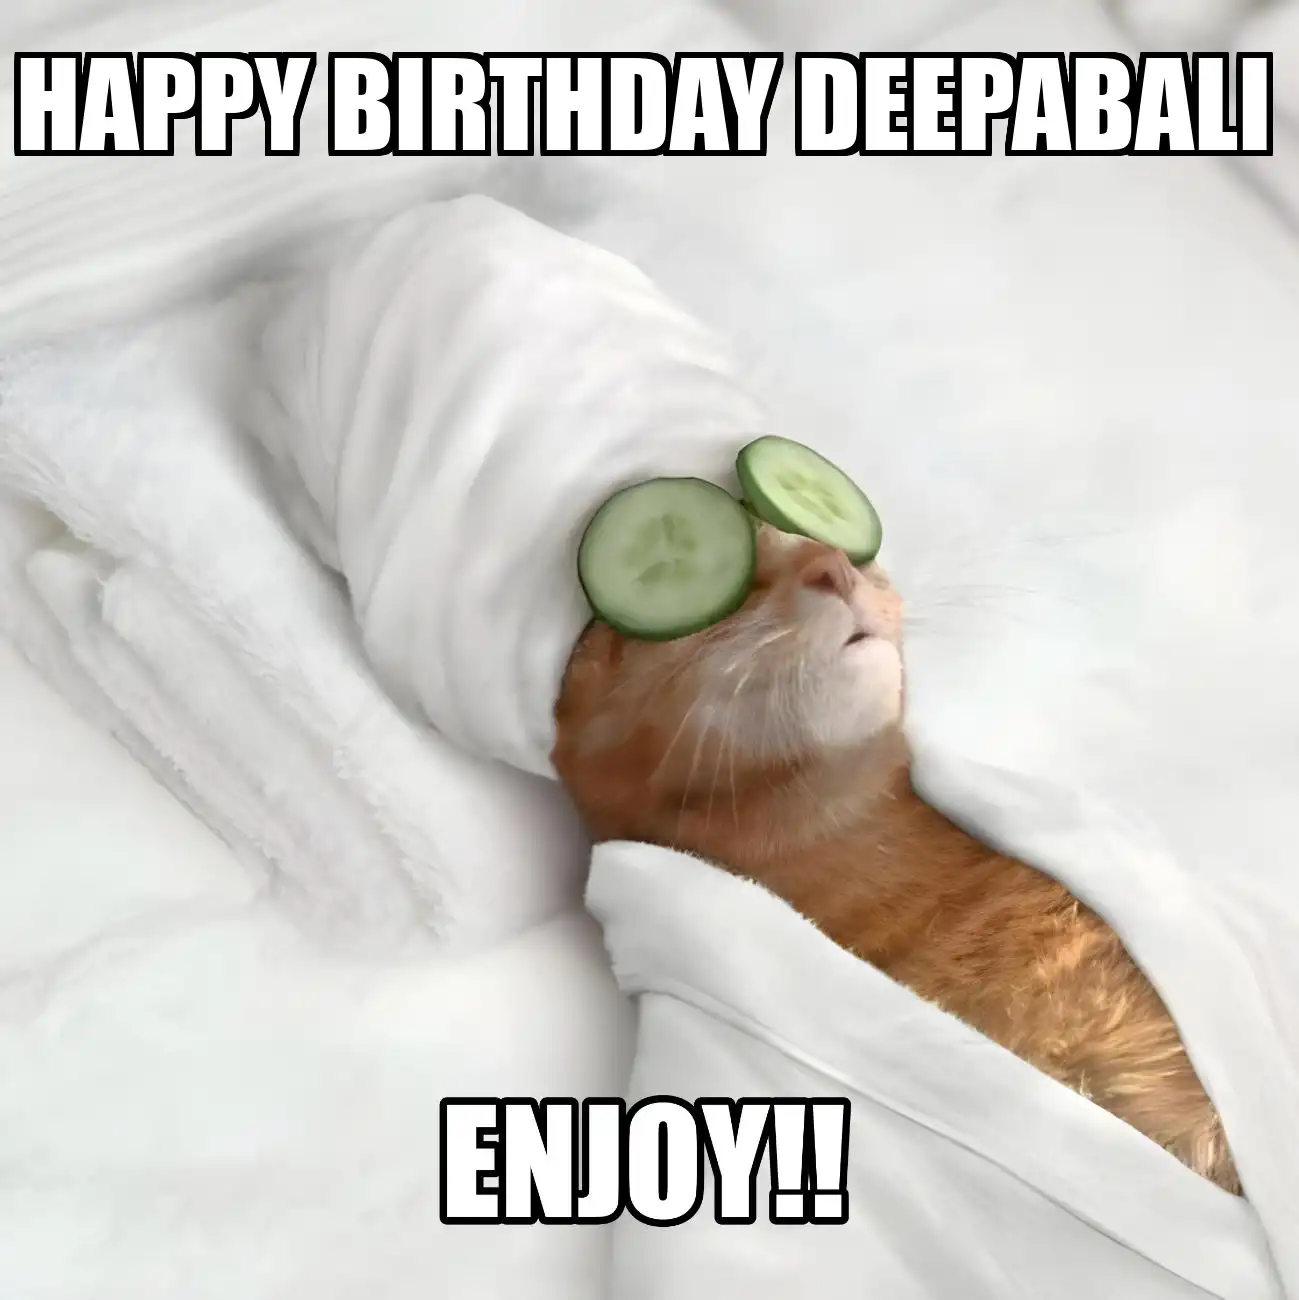 Happy Birthday Deepabali Enjoy Cat Meme